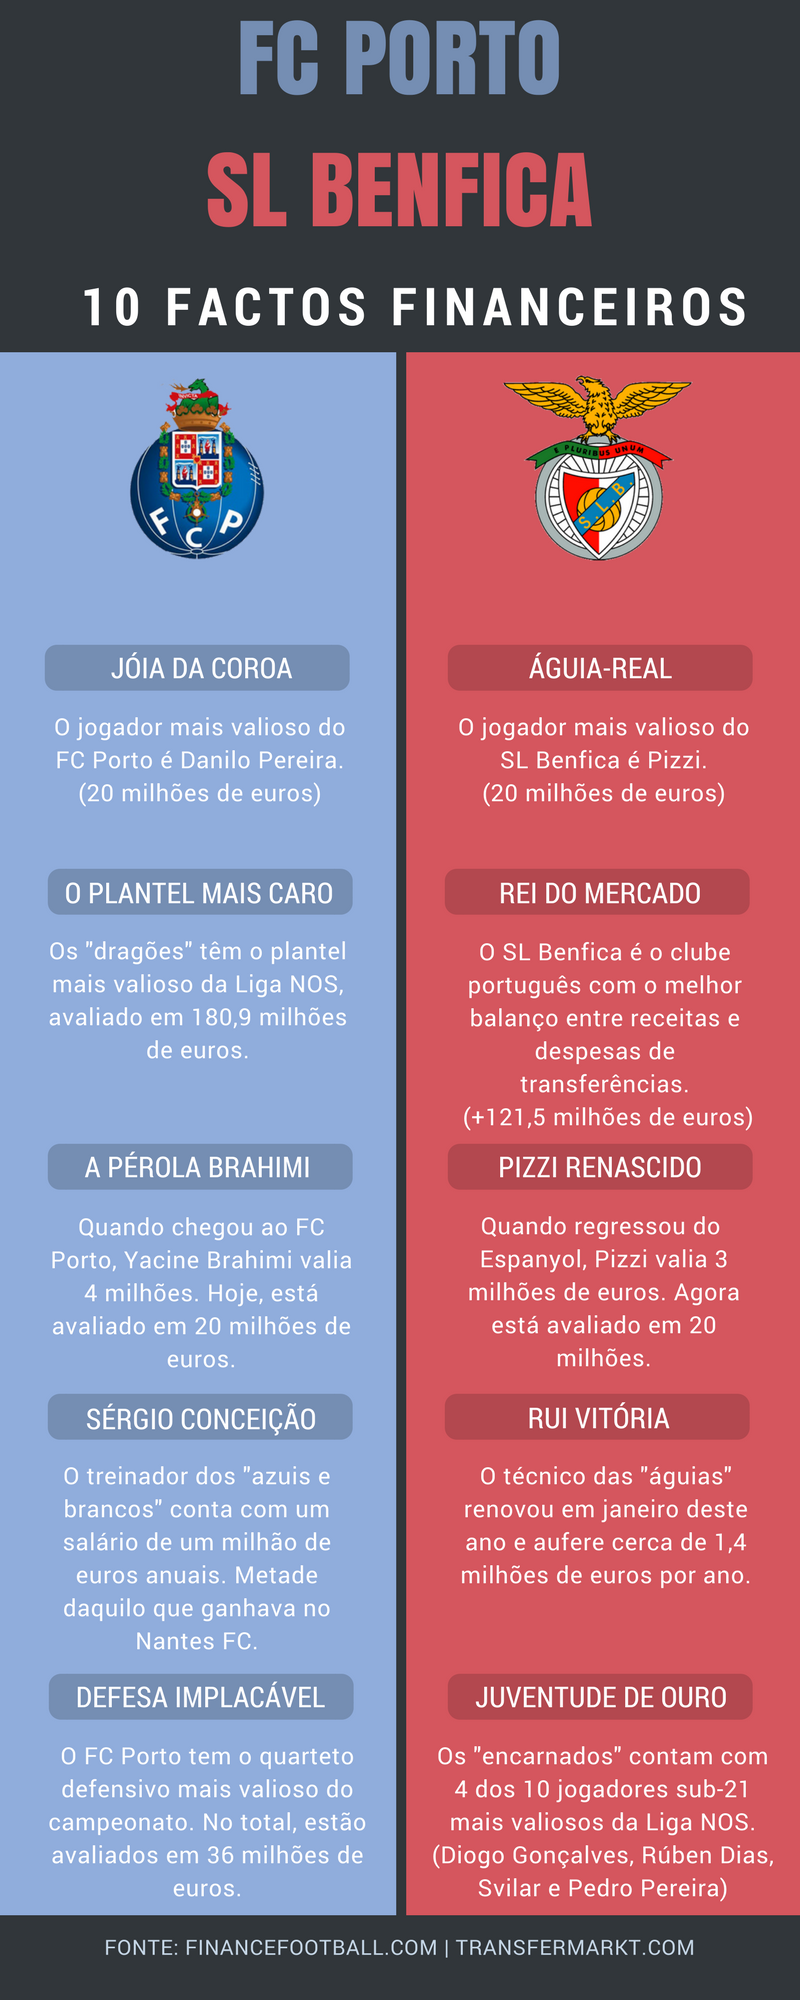 FC Porto - SL Benfica - Finance Football